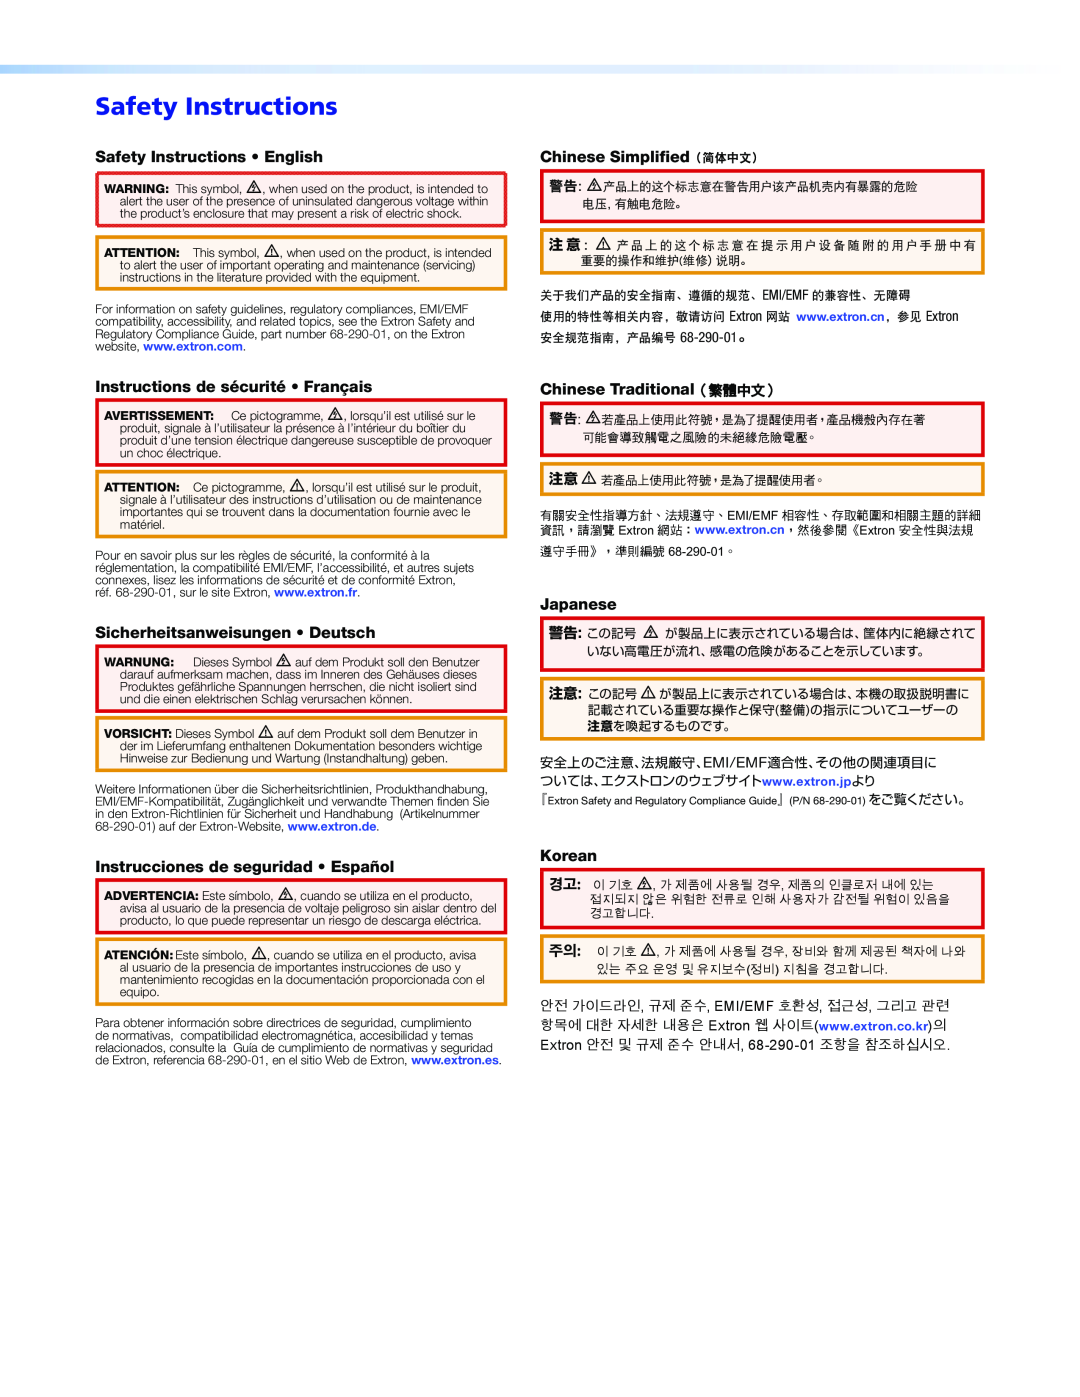 Extron electronic MPA 401 Safety Instructions English, Chinese Simplified（简体中文）, Instructions de sécurité Français 